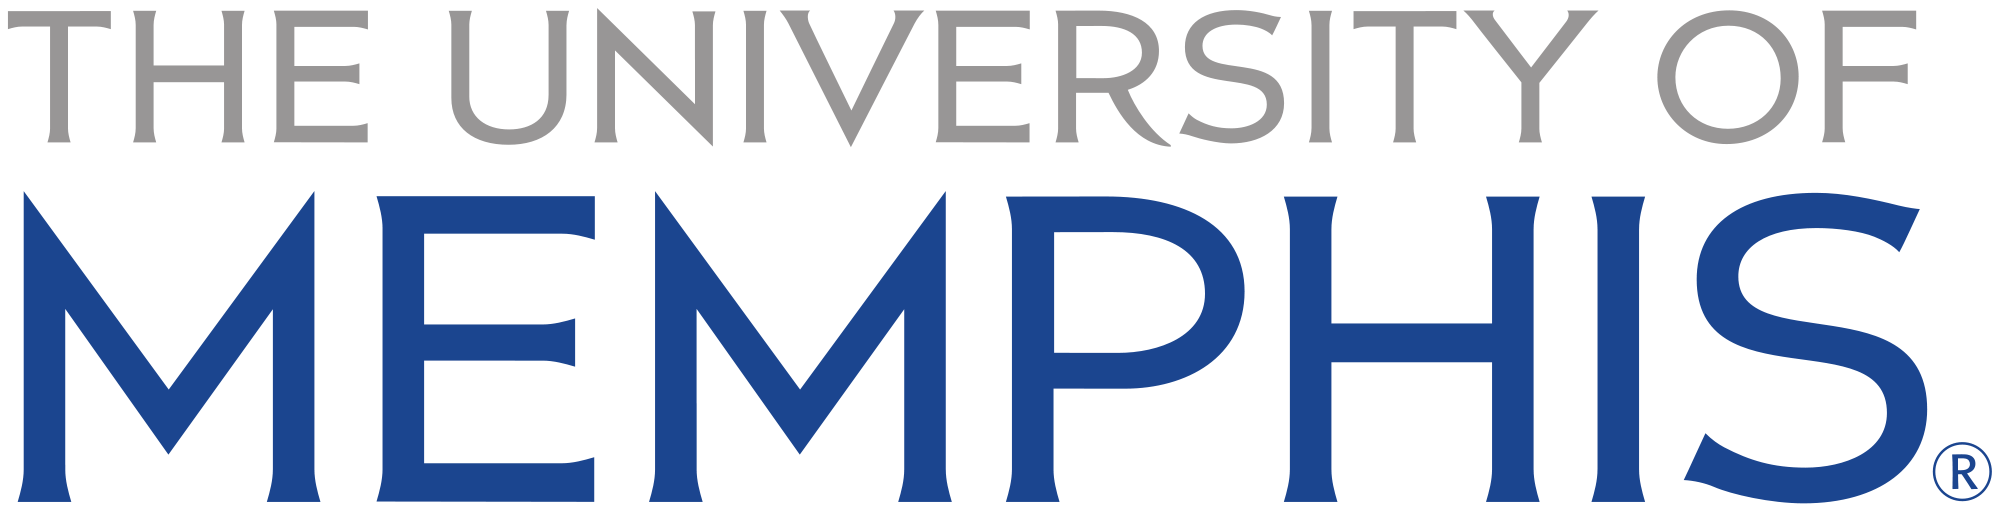 U of Memphis Logo - University of Memphis logo.svg